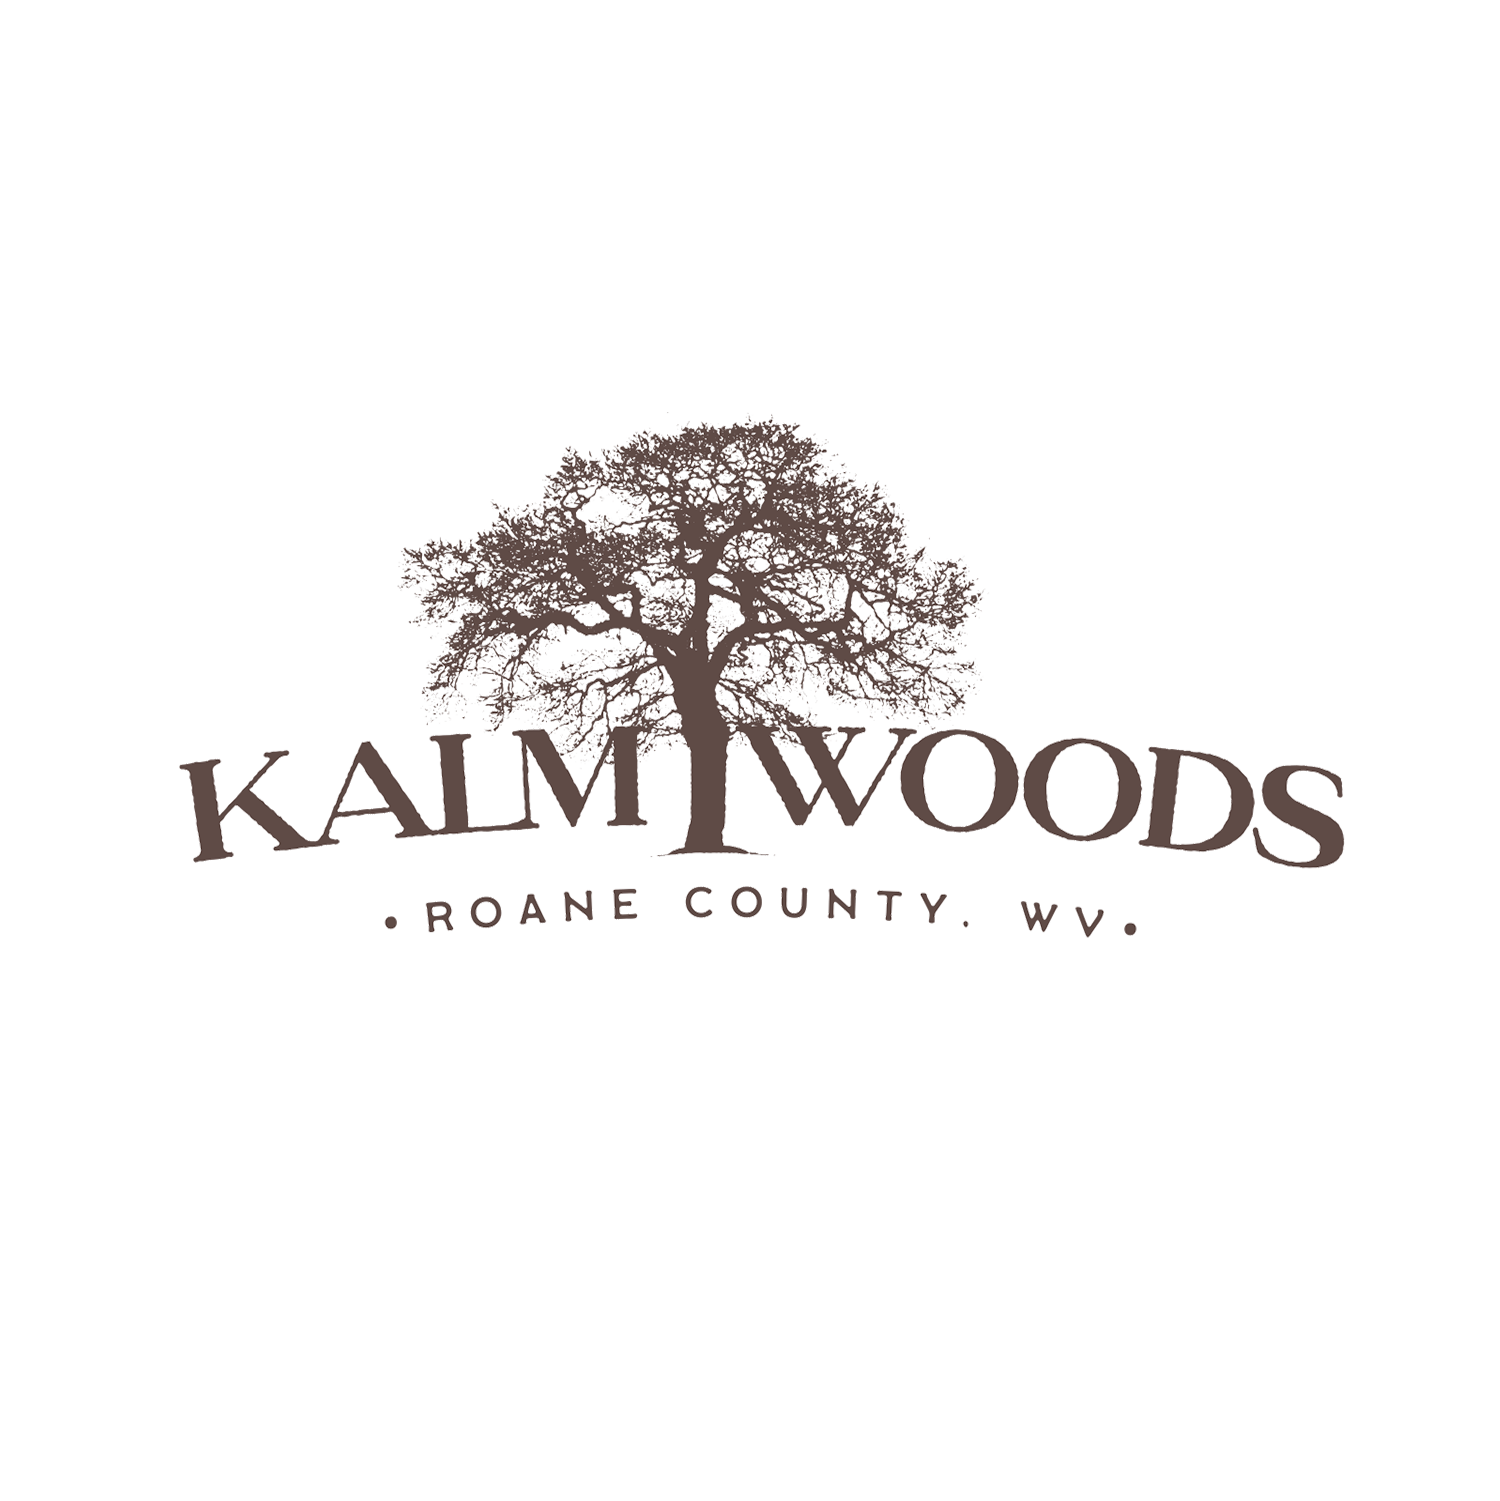 Kalm Woods Roane County, WV logo by OLSON MCINTYRE